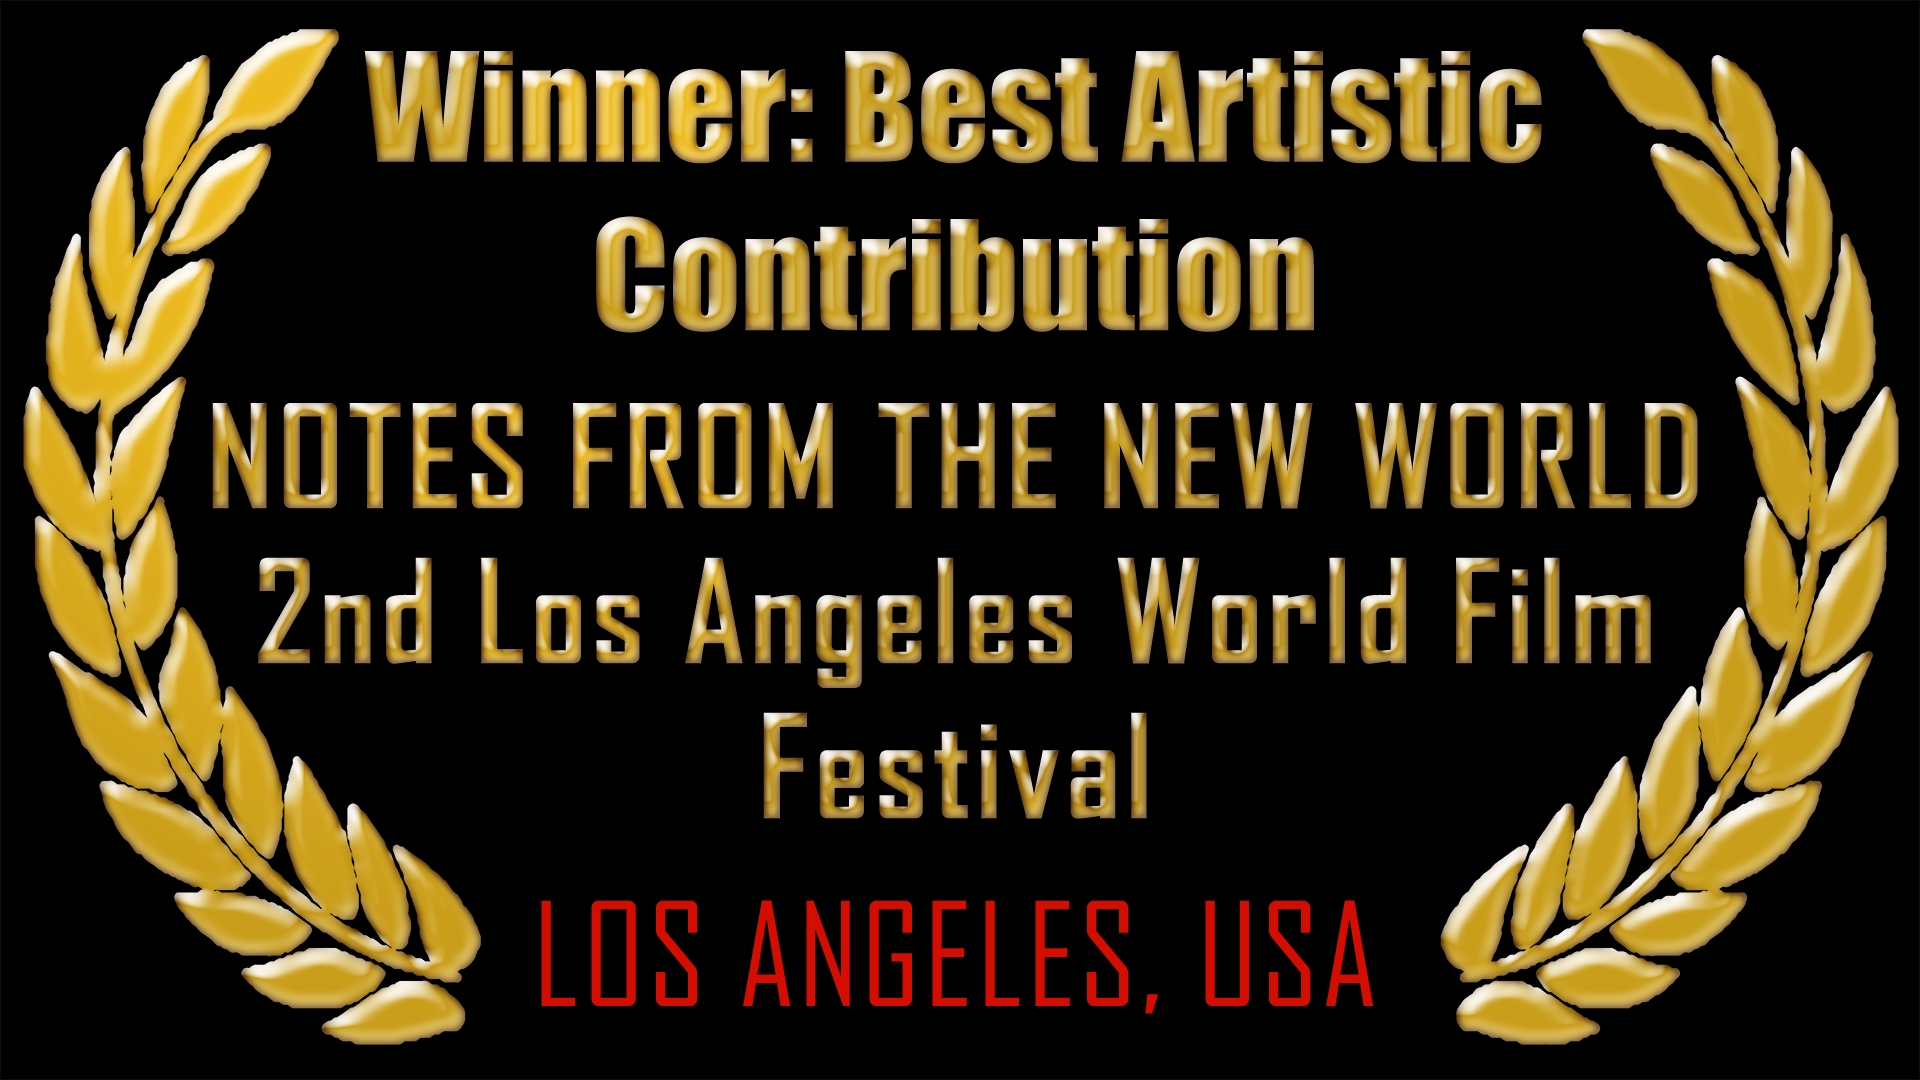 Best Artistic Contribution, Los Angeles